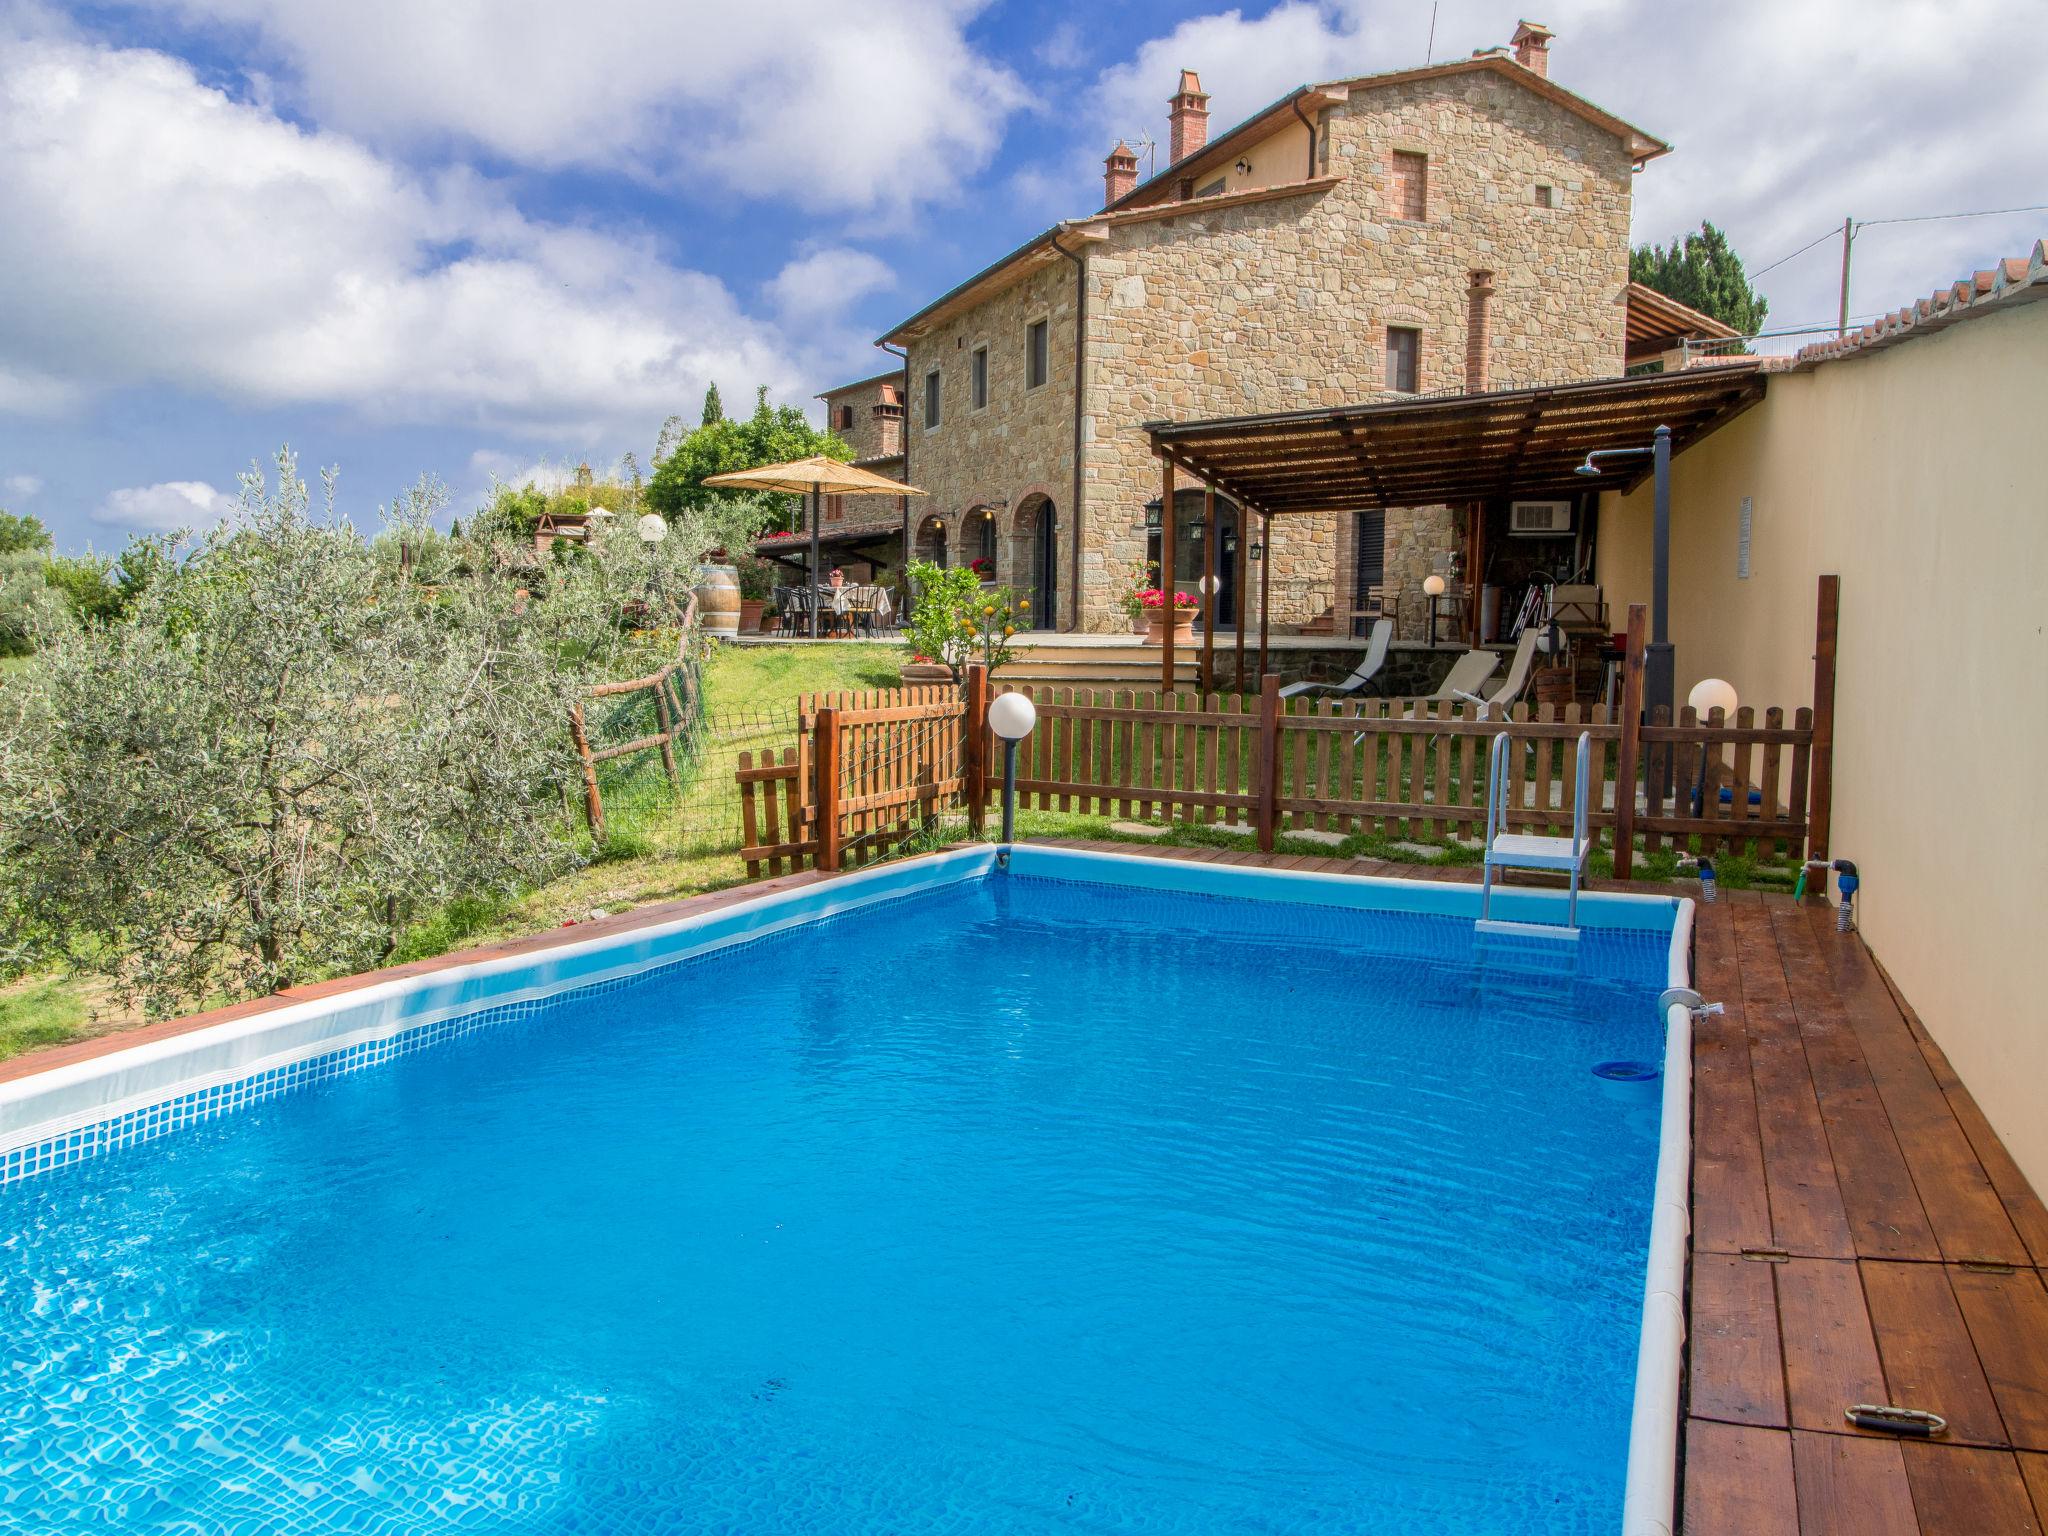 Photo 1 - Maison de 5 chambres à Civitella in Val di Chiana avec piscine privée et terrasse